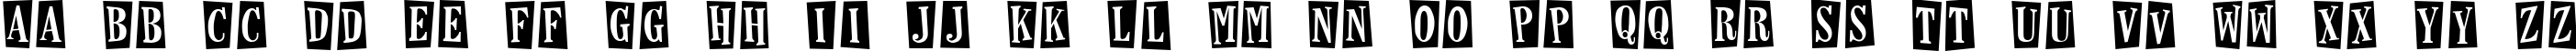 Пример написания английского алфавита шрифтом Horseshoes And Lemonade